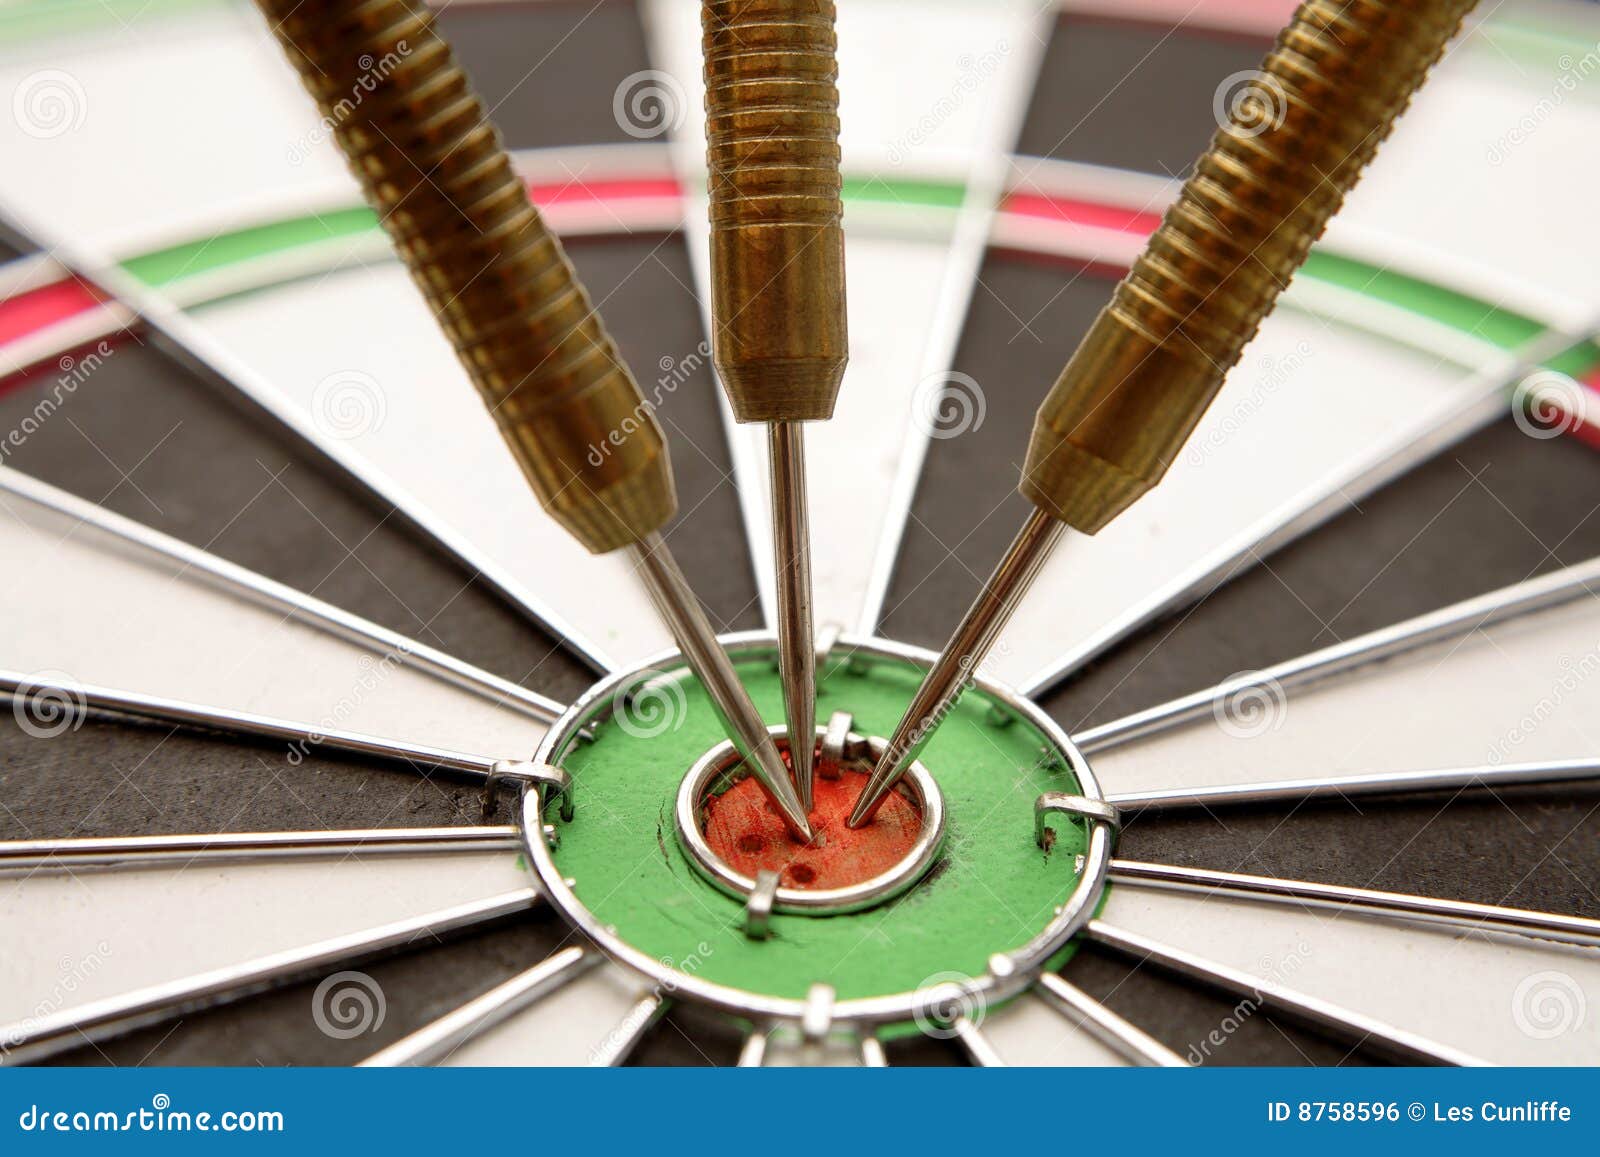 darts in dartboard